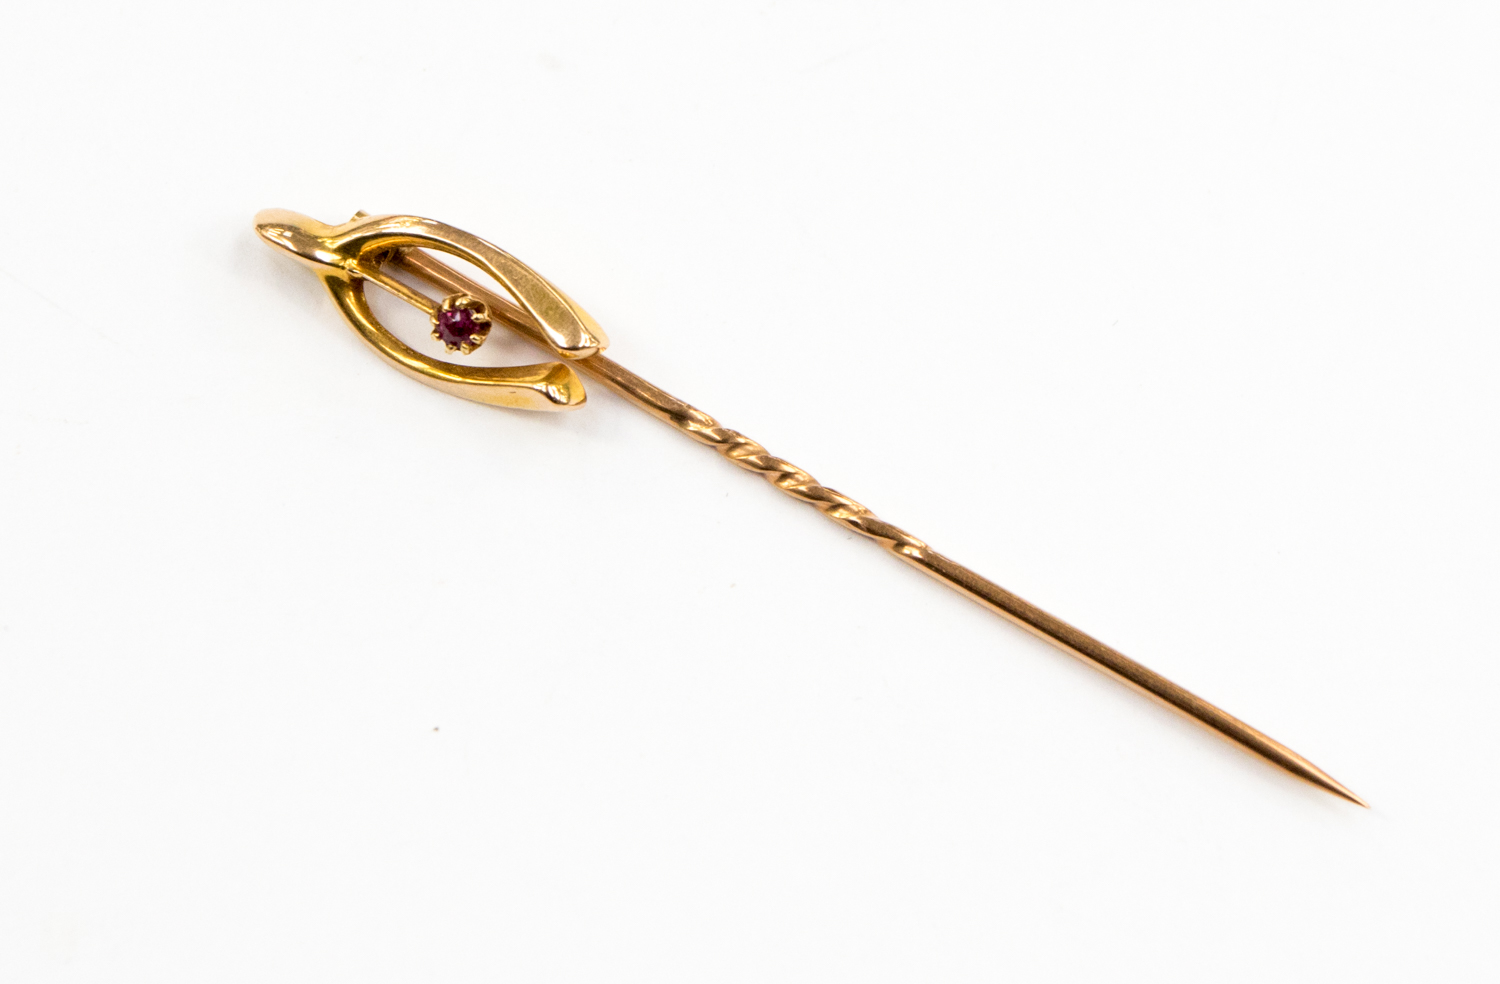 A 9ct gold stick pin with finial wish bone shape,